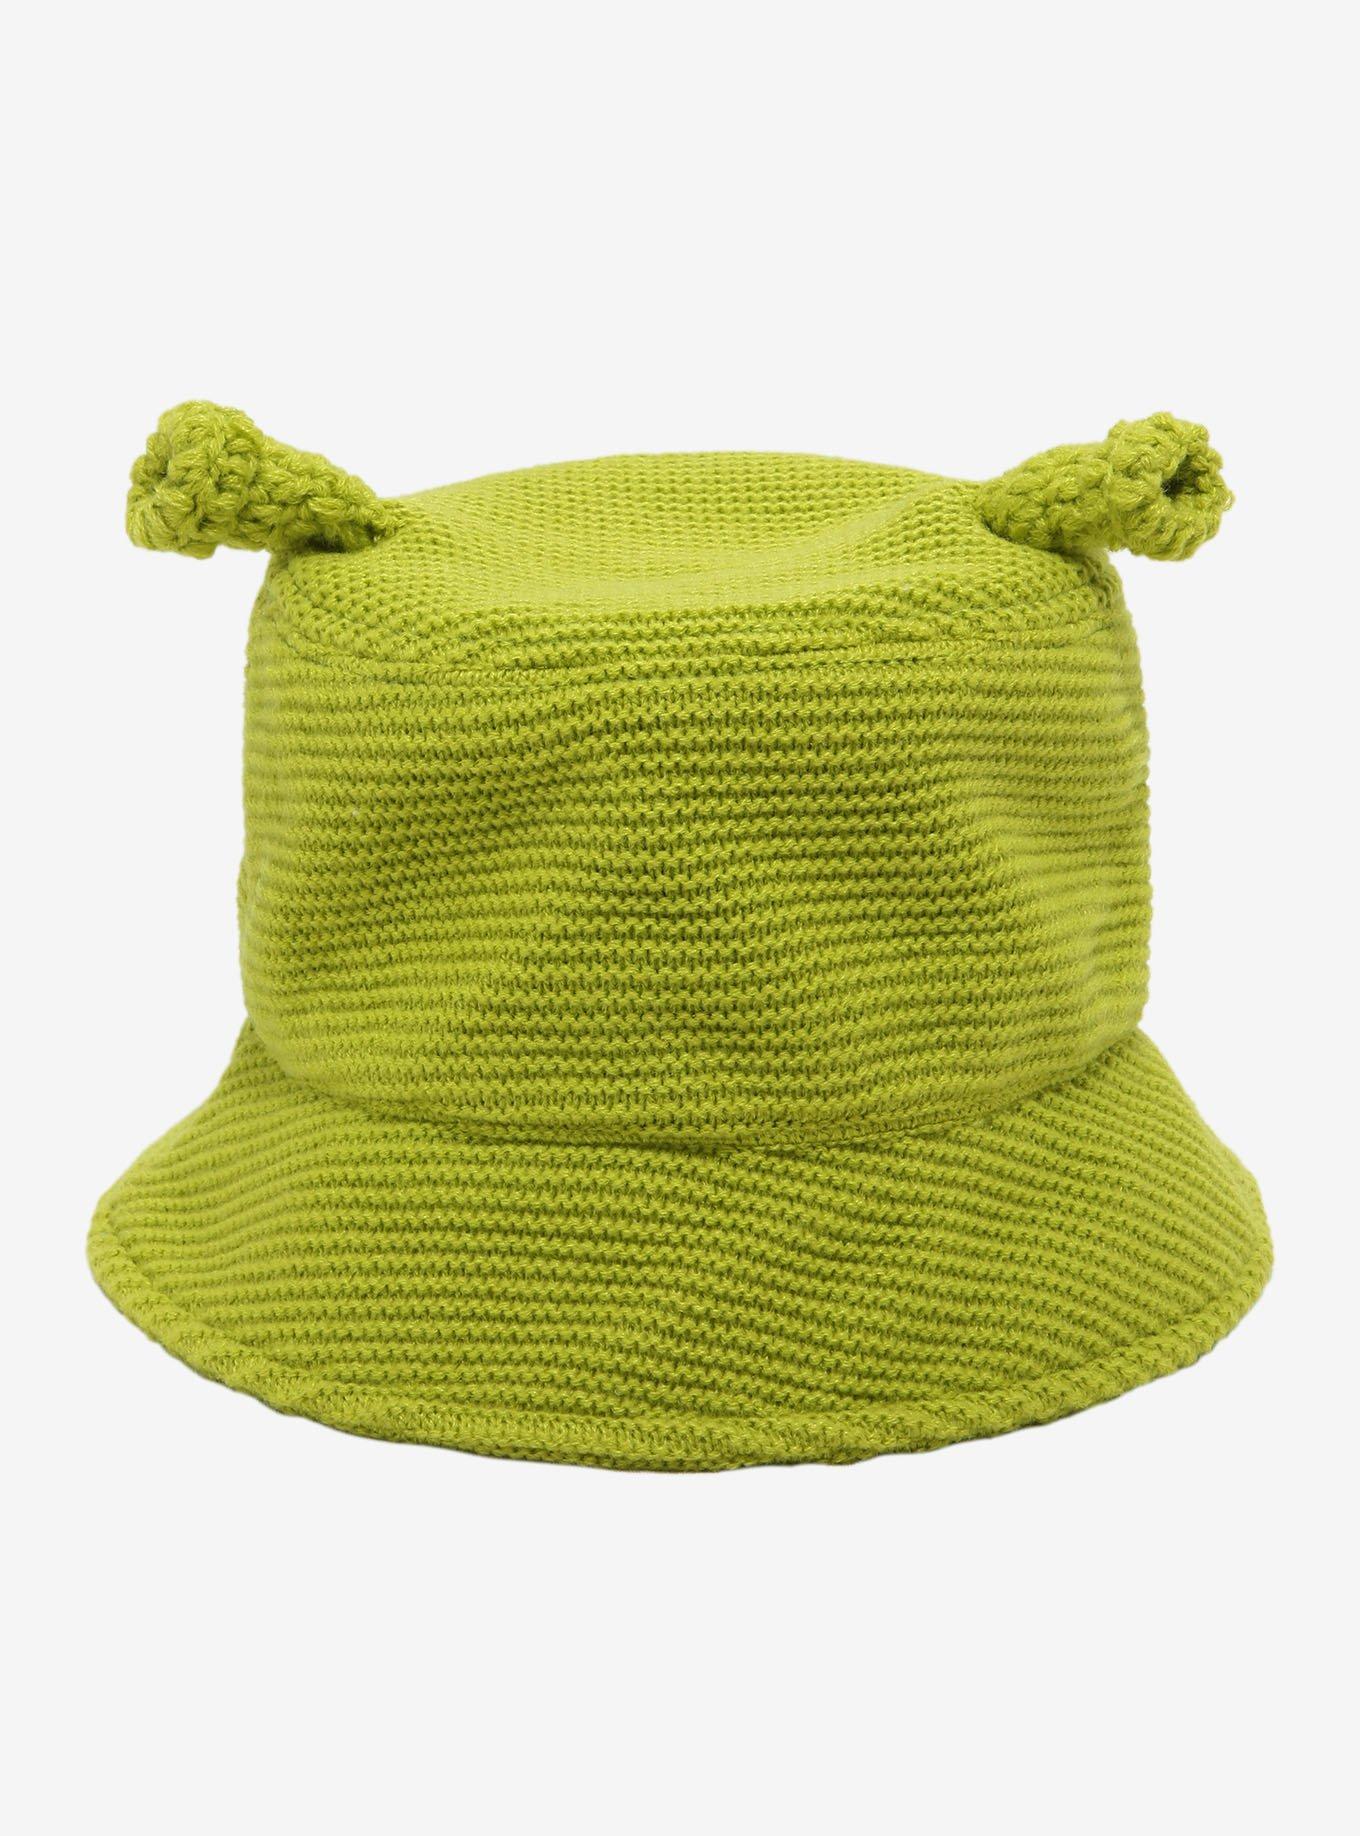 Vintage Print Hat, Green Bucket Hat, Patterned Sun Hat, Retro